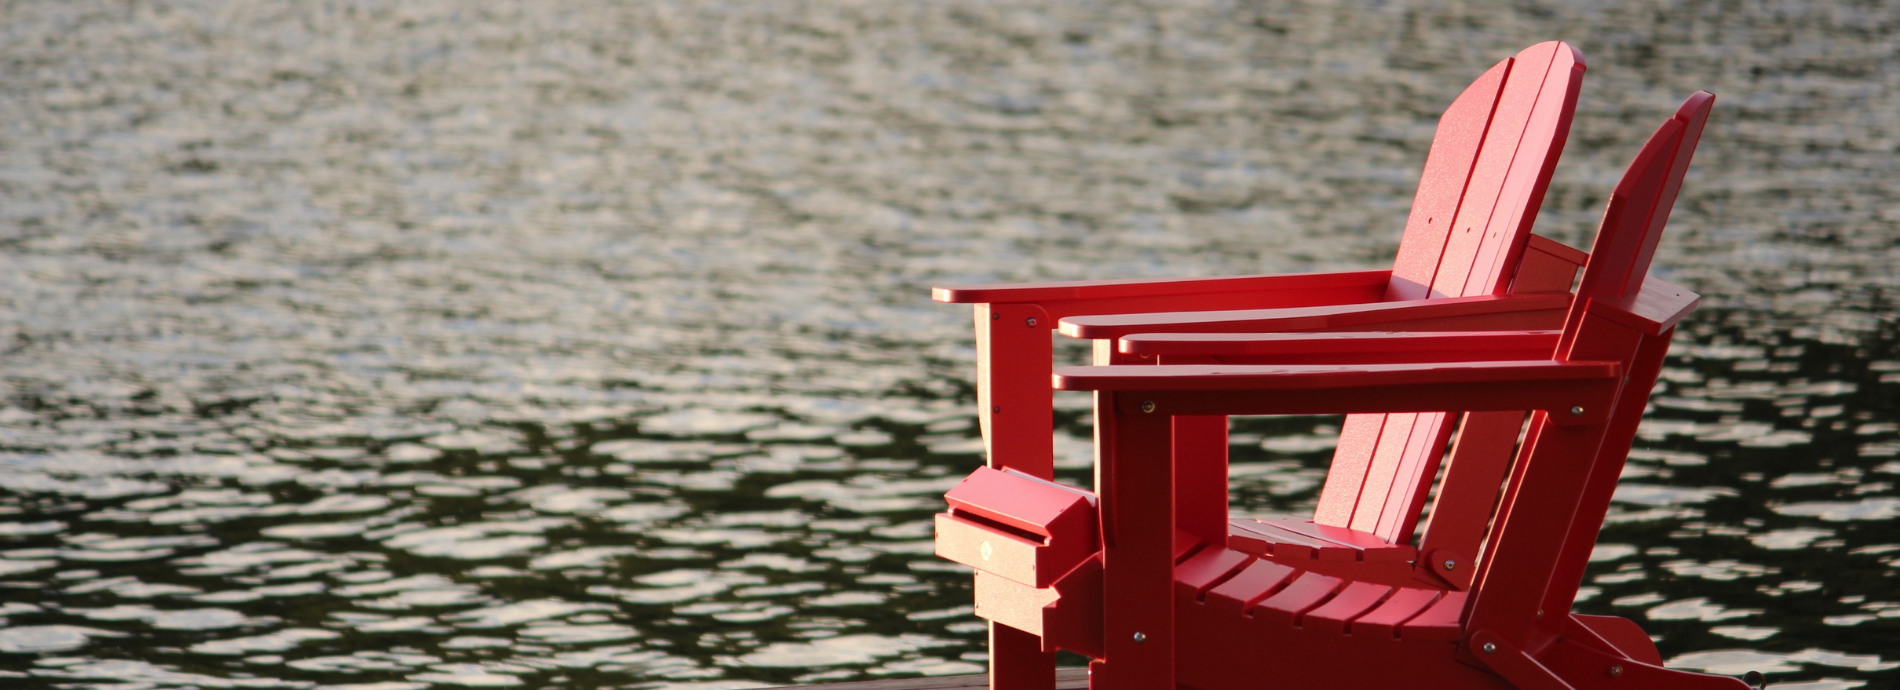 red Muskoka chair on dock by calm lake